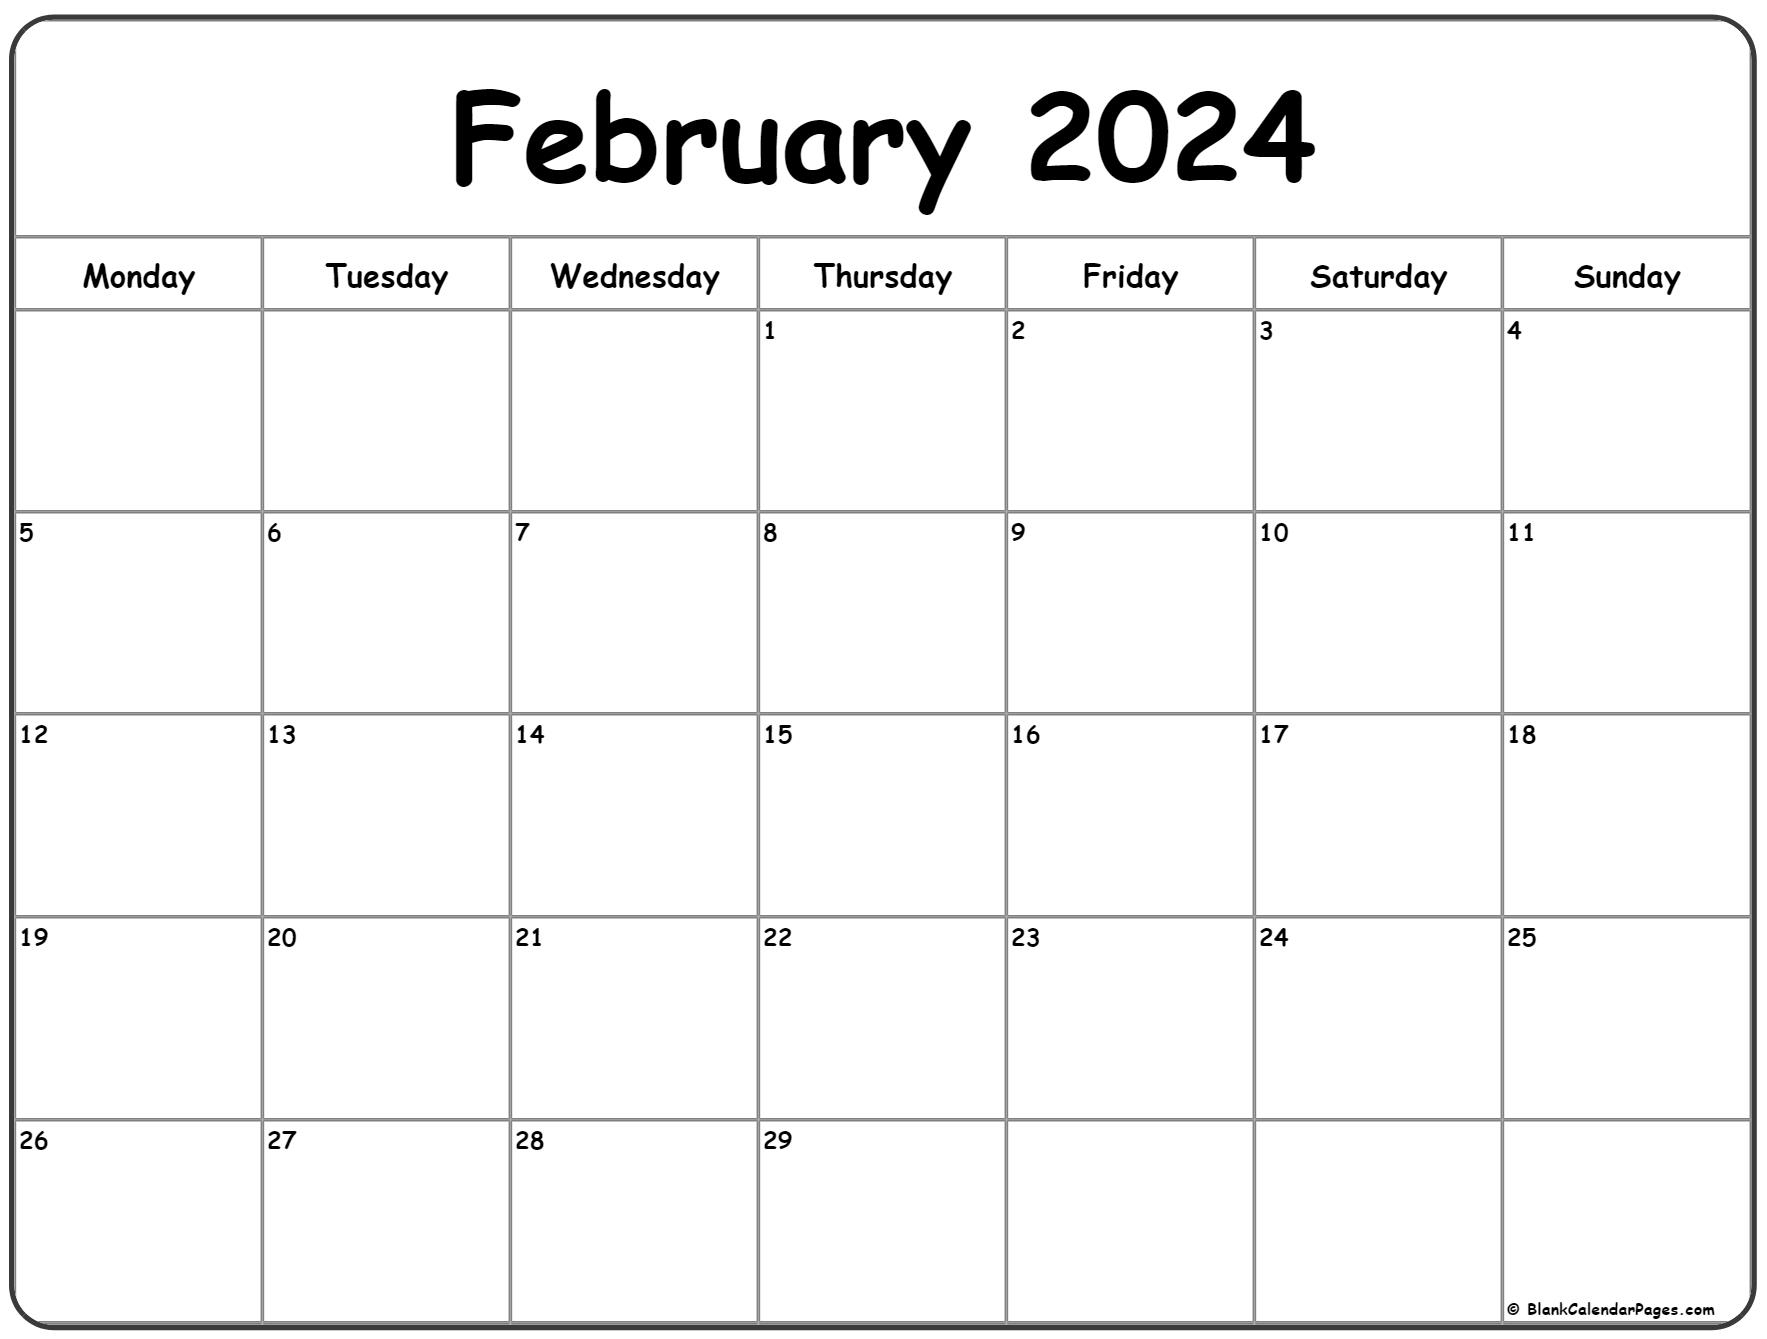 February 2024 Monday Calendar | Monday To Sunday for Month Of February 2024 Printable Calendar